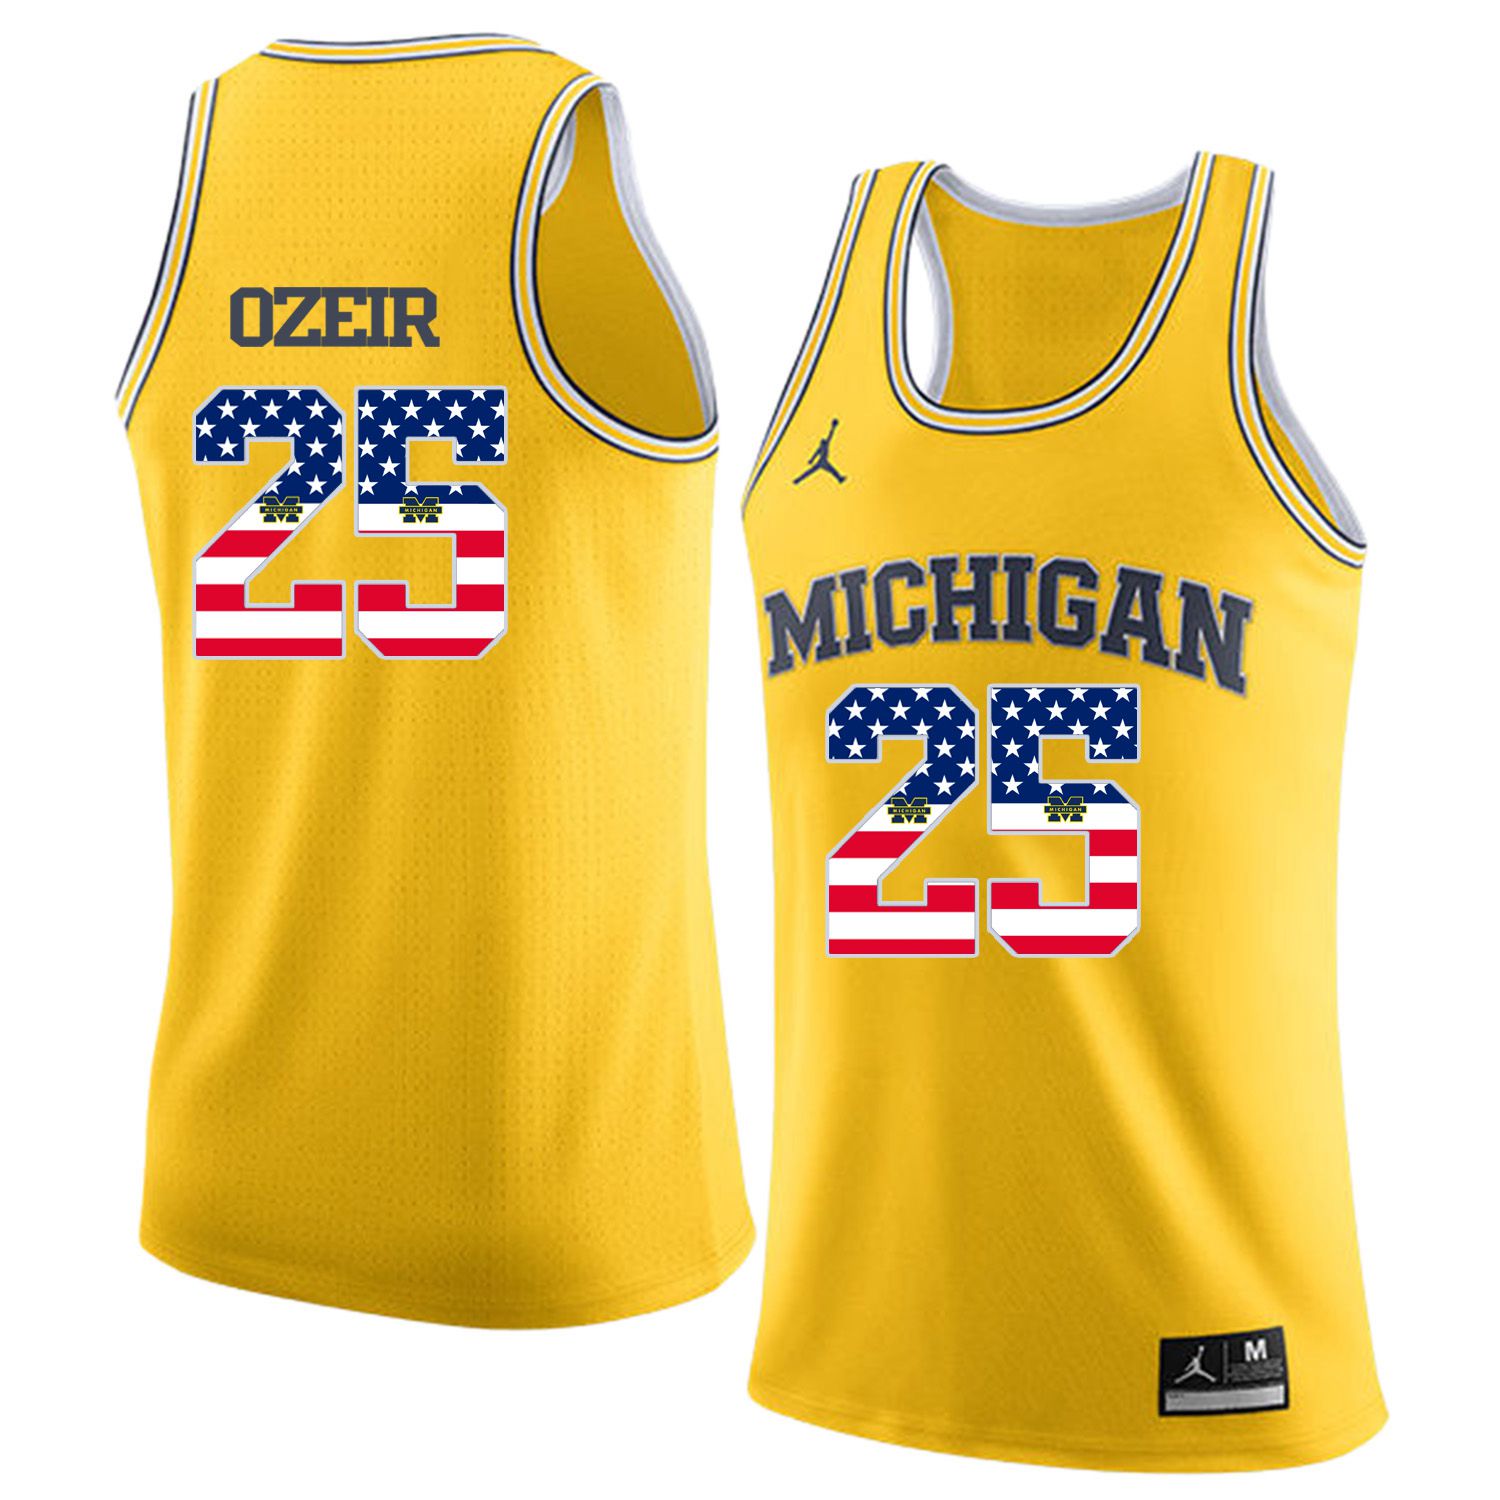 Men Jordan University of Michigan Basketball Yellow #25 Ozeir Flag Customized NCAA Jerseys->customized ncaa jersey->Custom Jersey